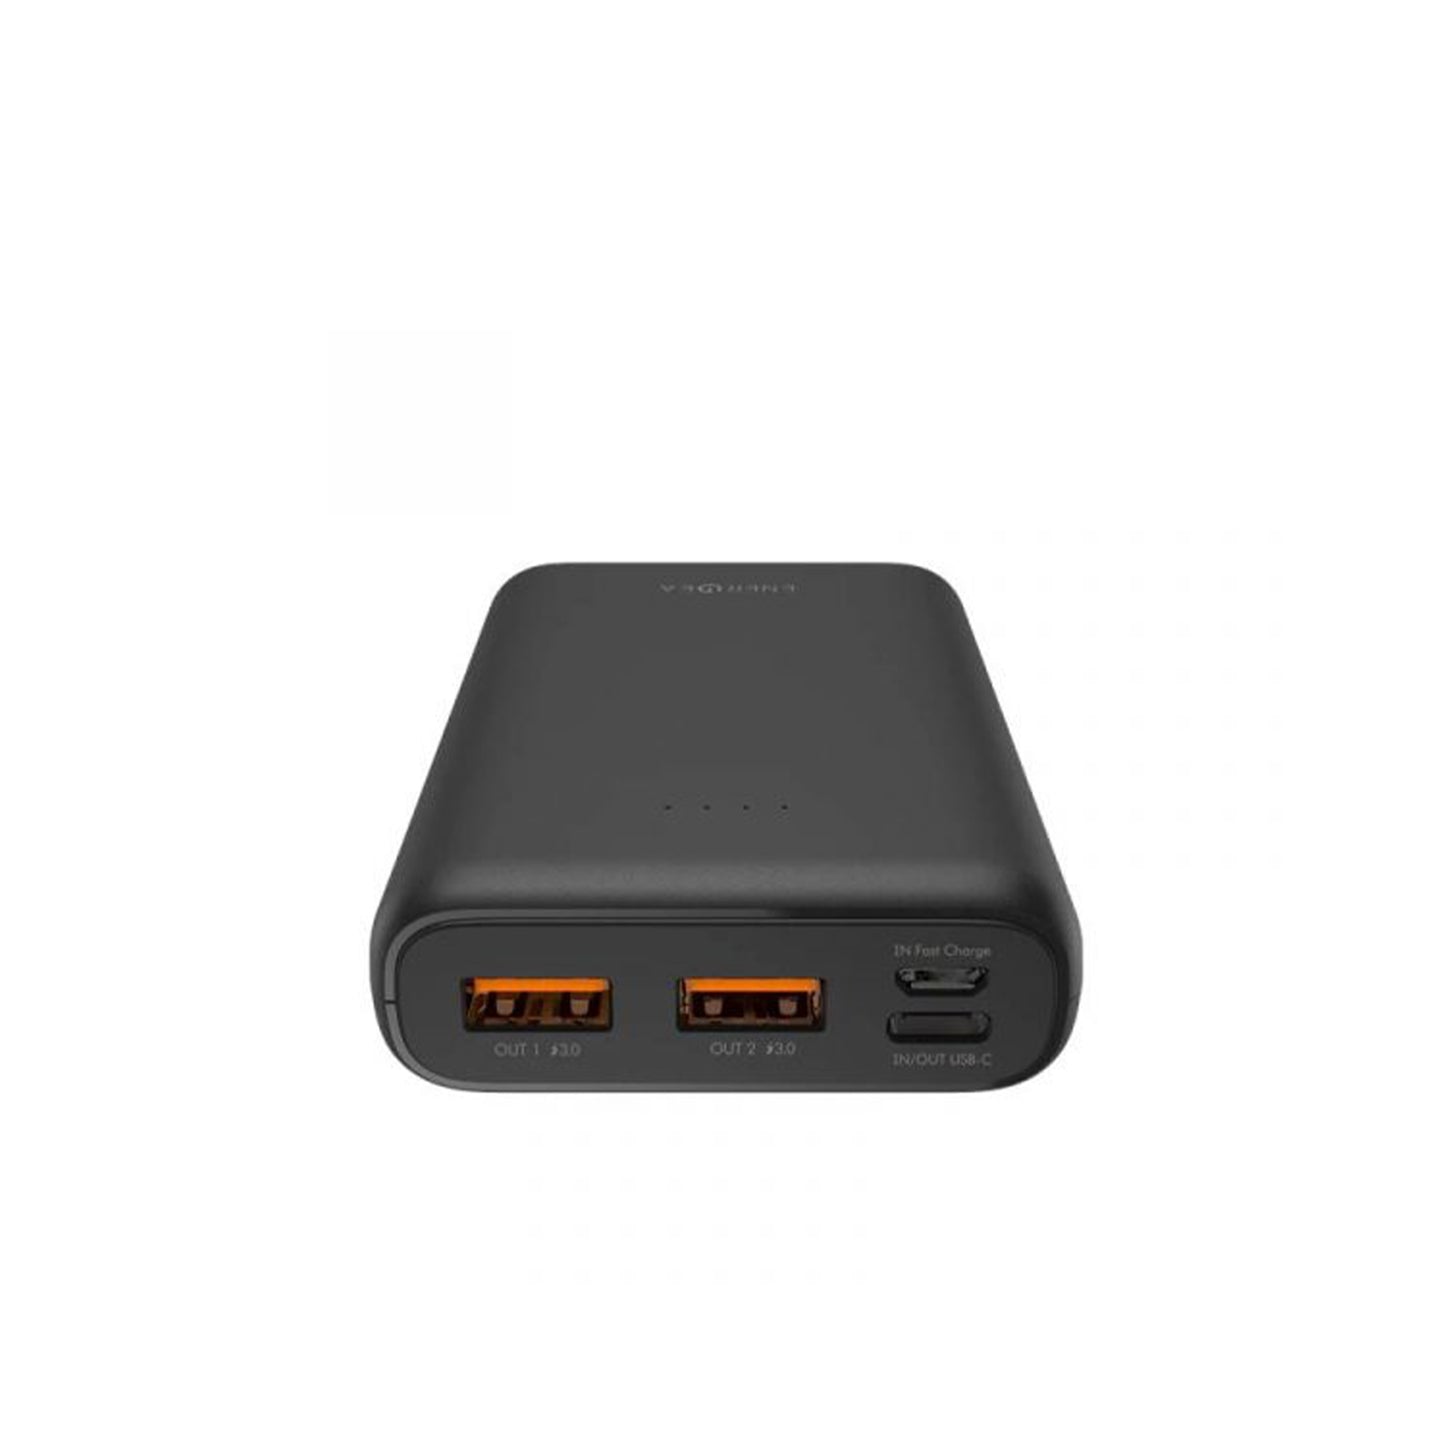 "ENERGEA Compac Ultra 20,000mAh USB-C PD Powerbank - Black"